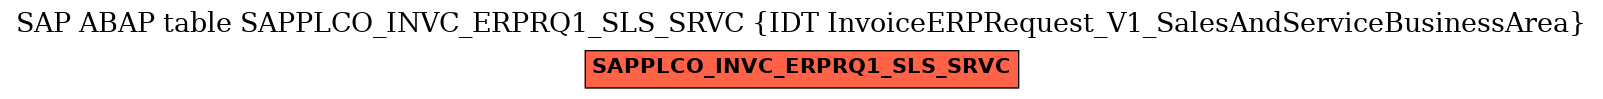 E-R Diagram for table SAPPLCO_INVC_ERPRQ1_SLS_SRVC (IDT InvoiceERPRequest_V1_SalesAndServiceBusinessArea)